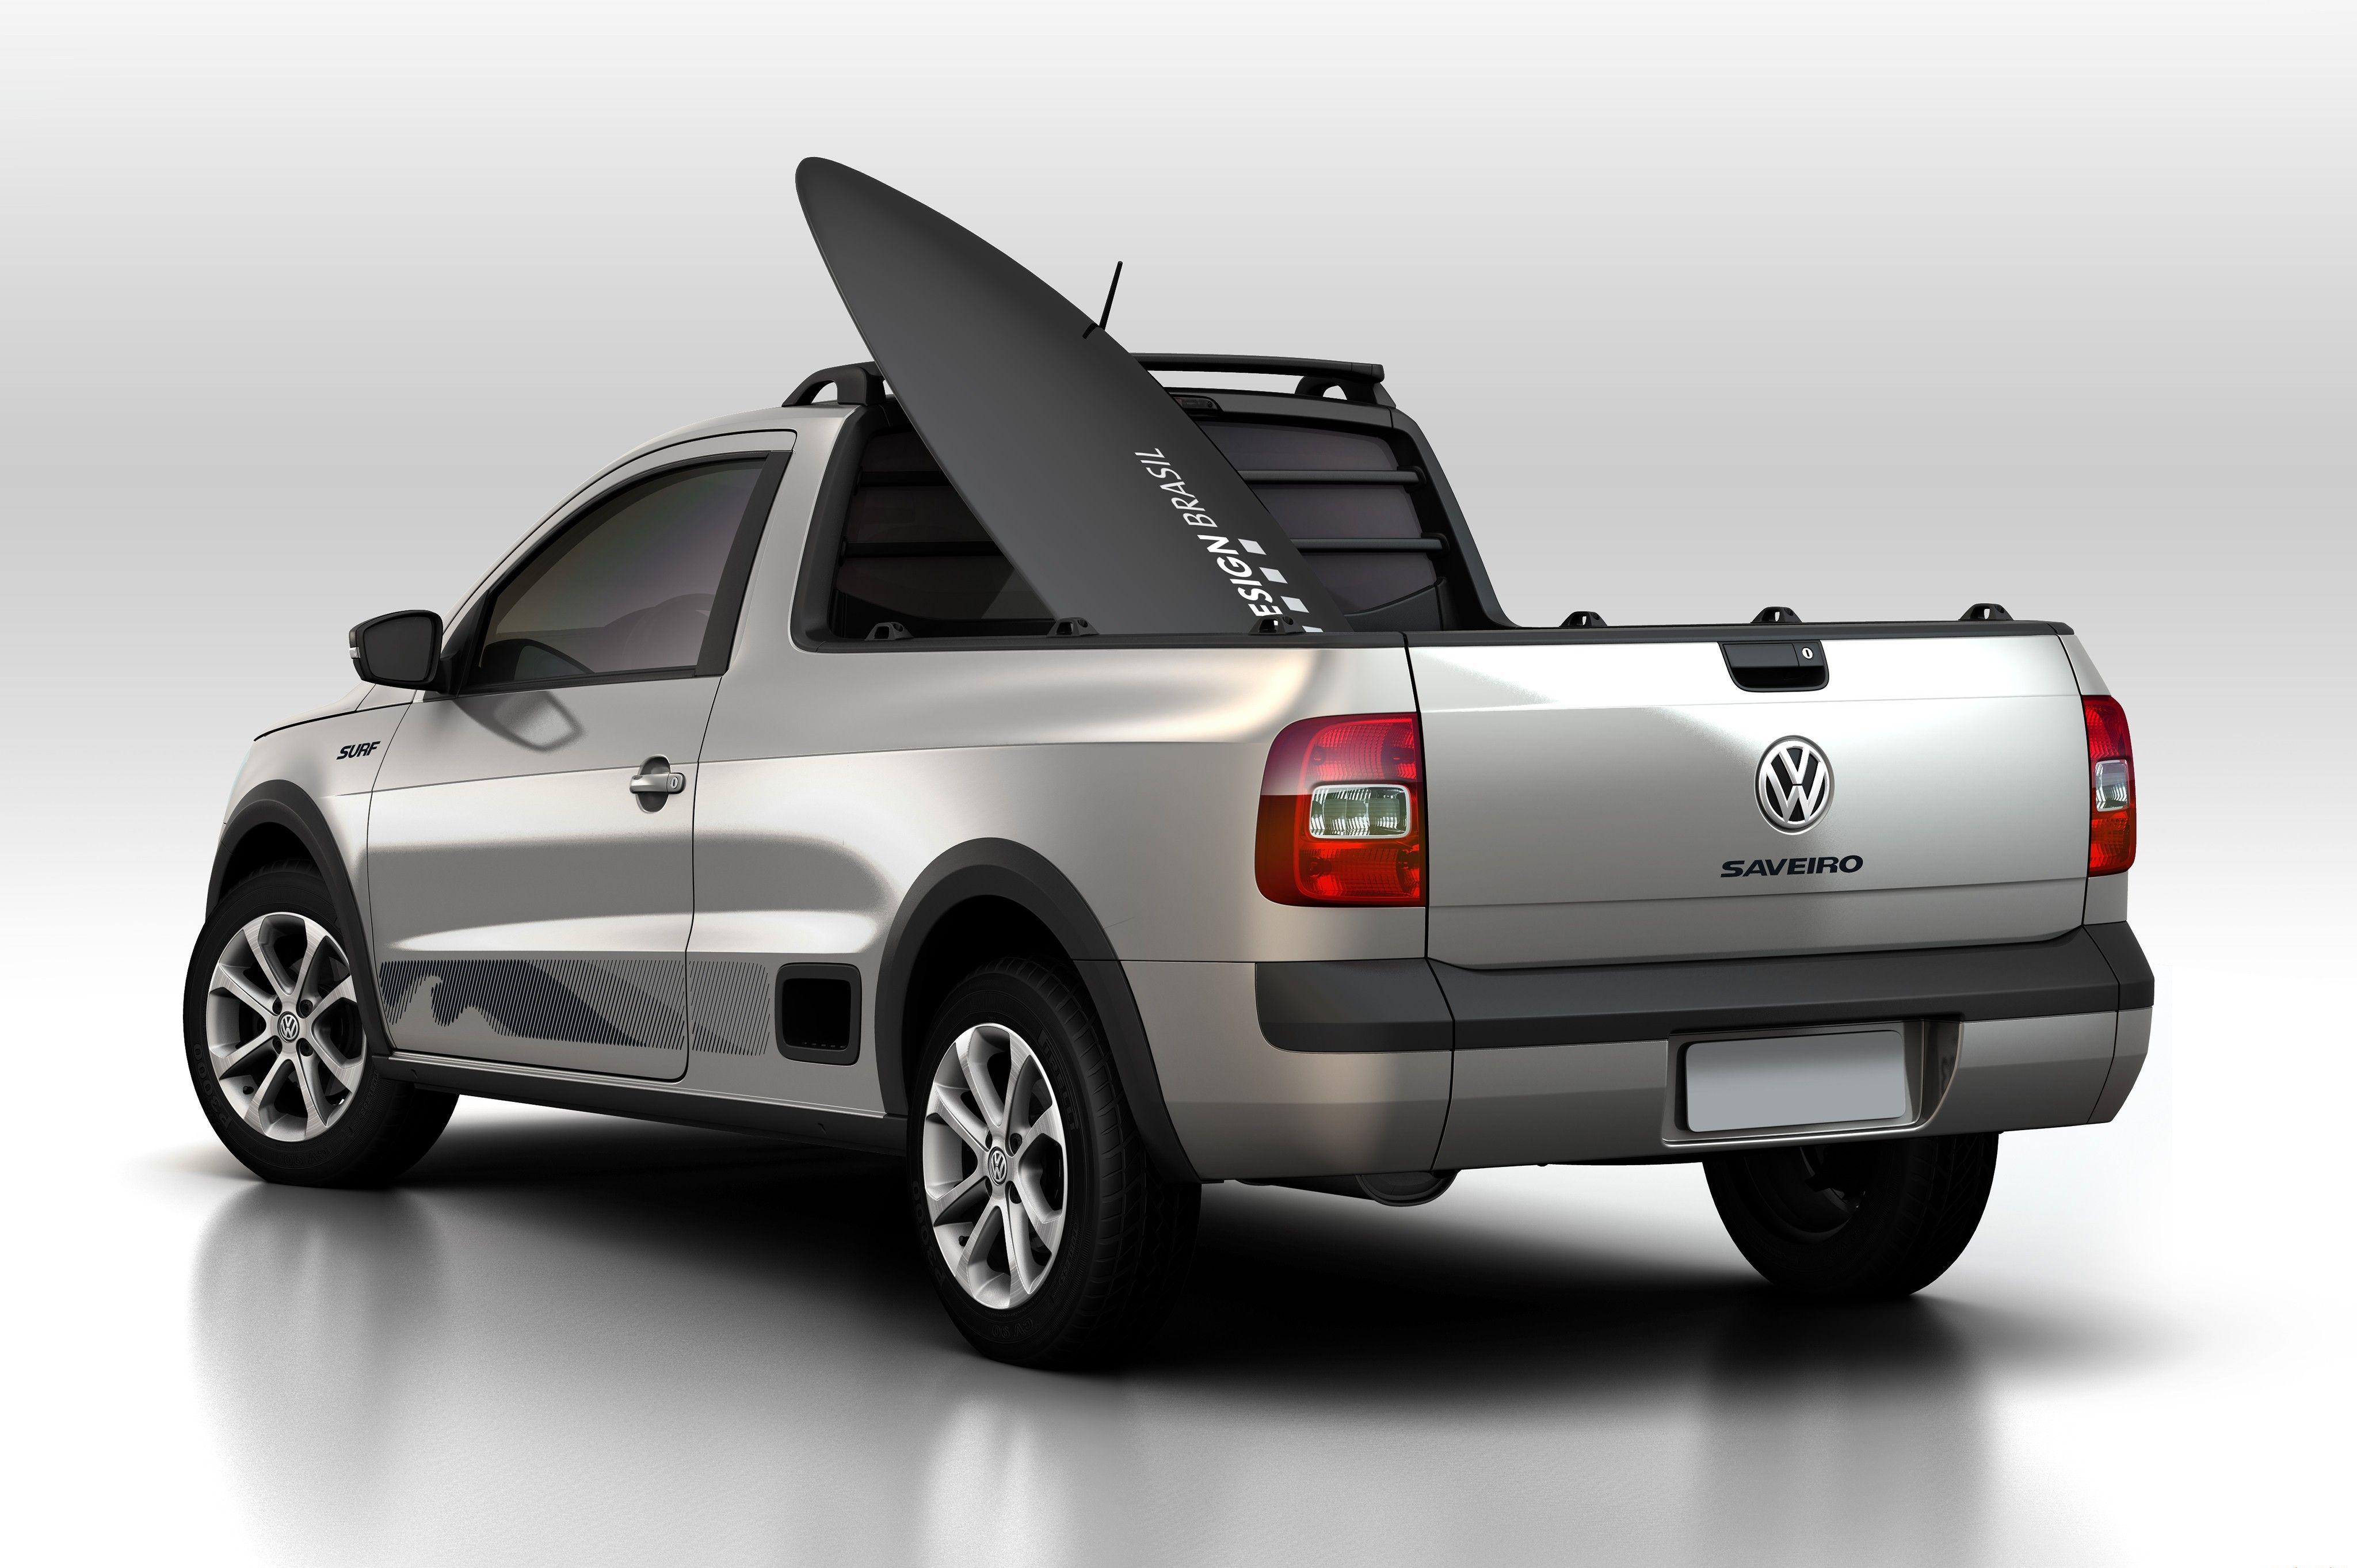 Volkswagen Saveiro 4k Ultra HD Wallpaper. Background Image